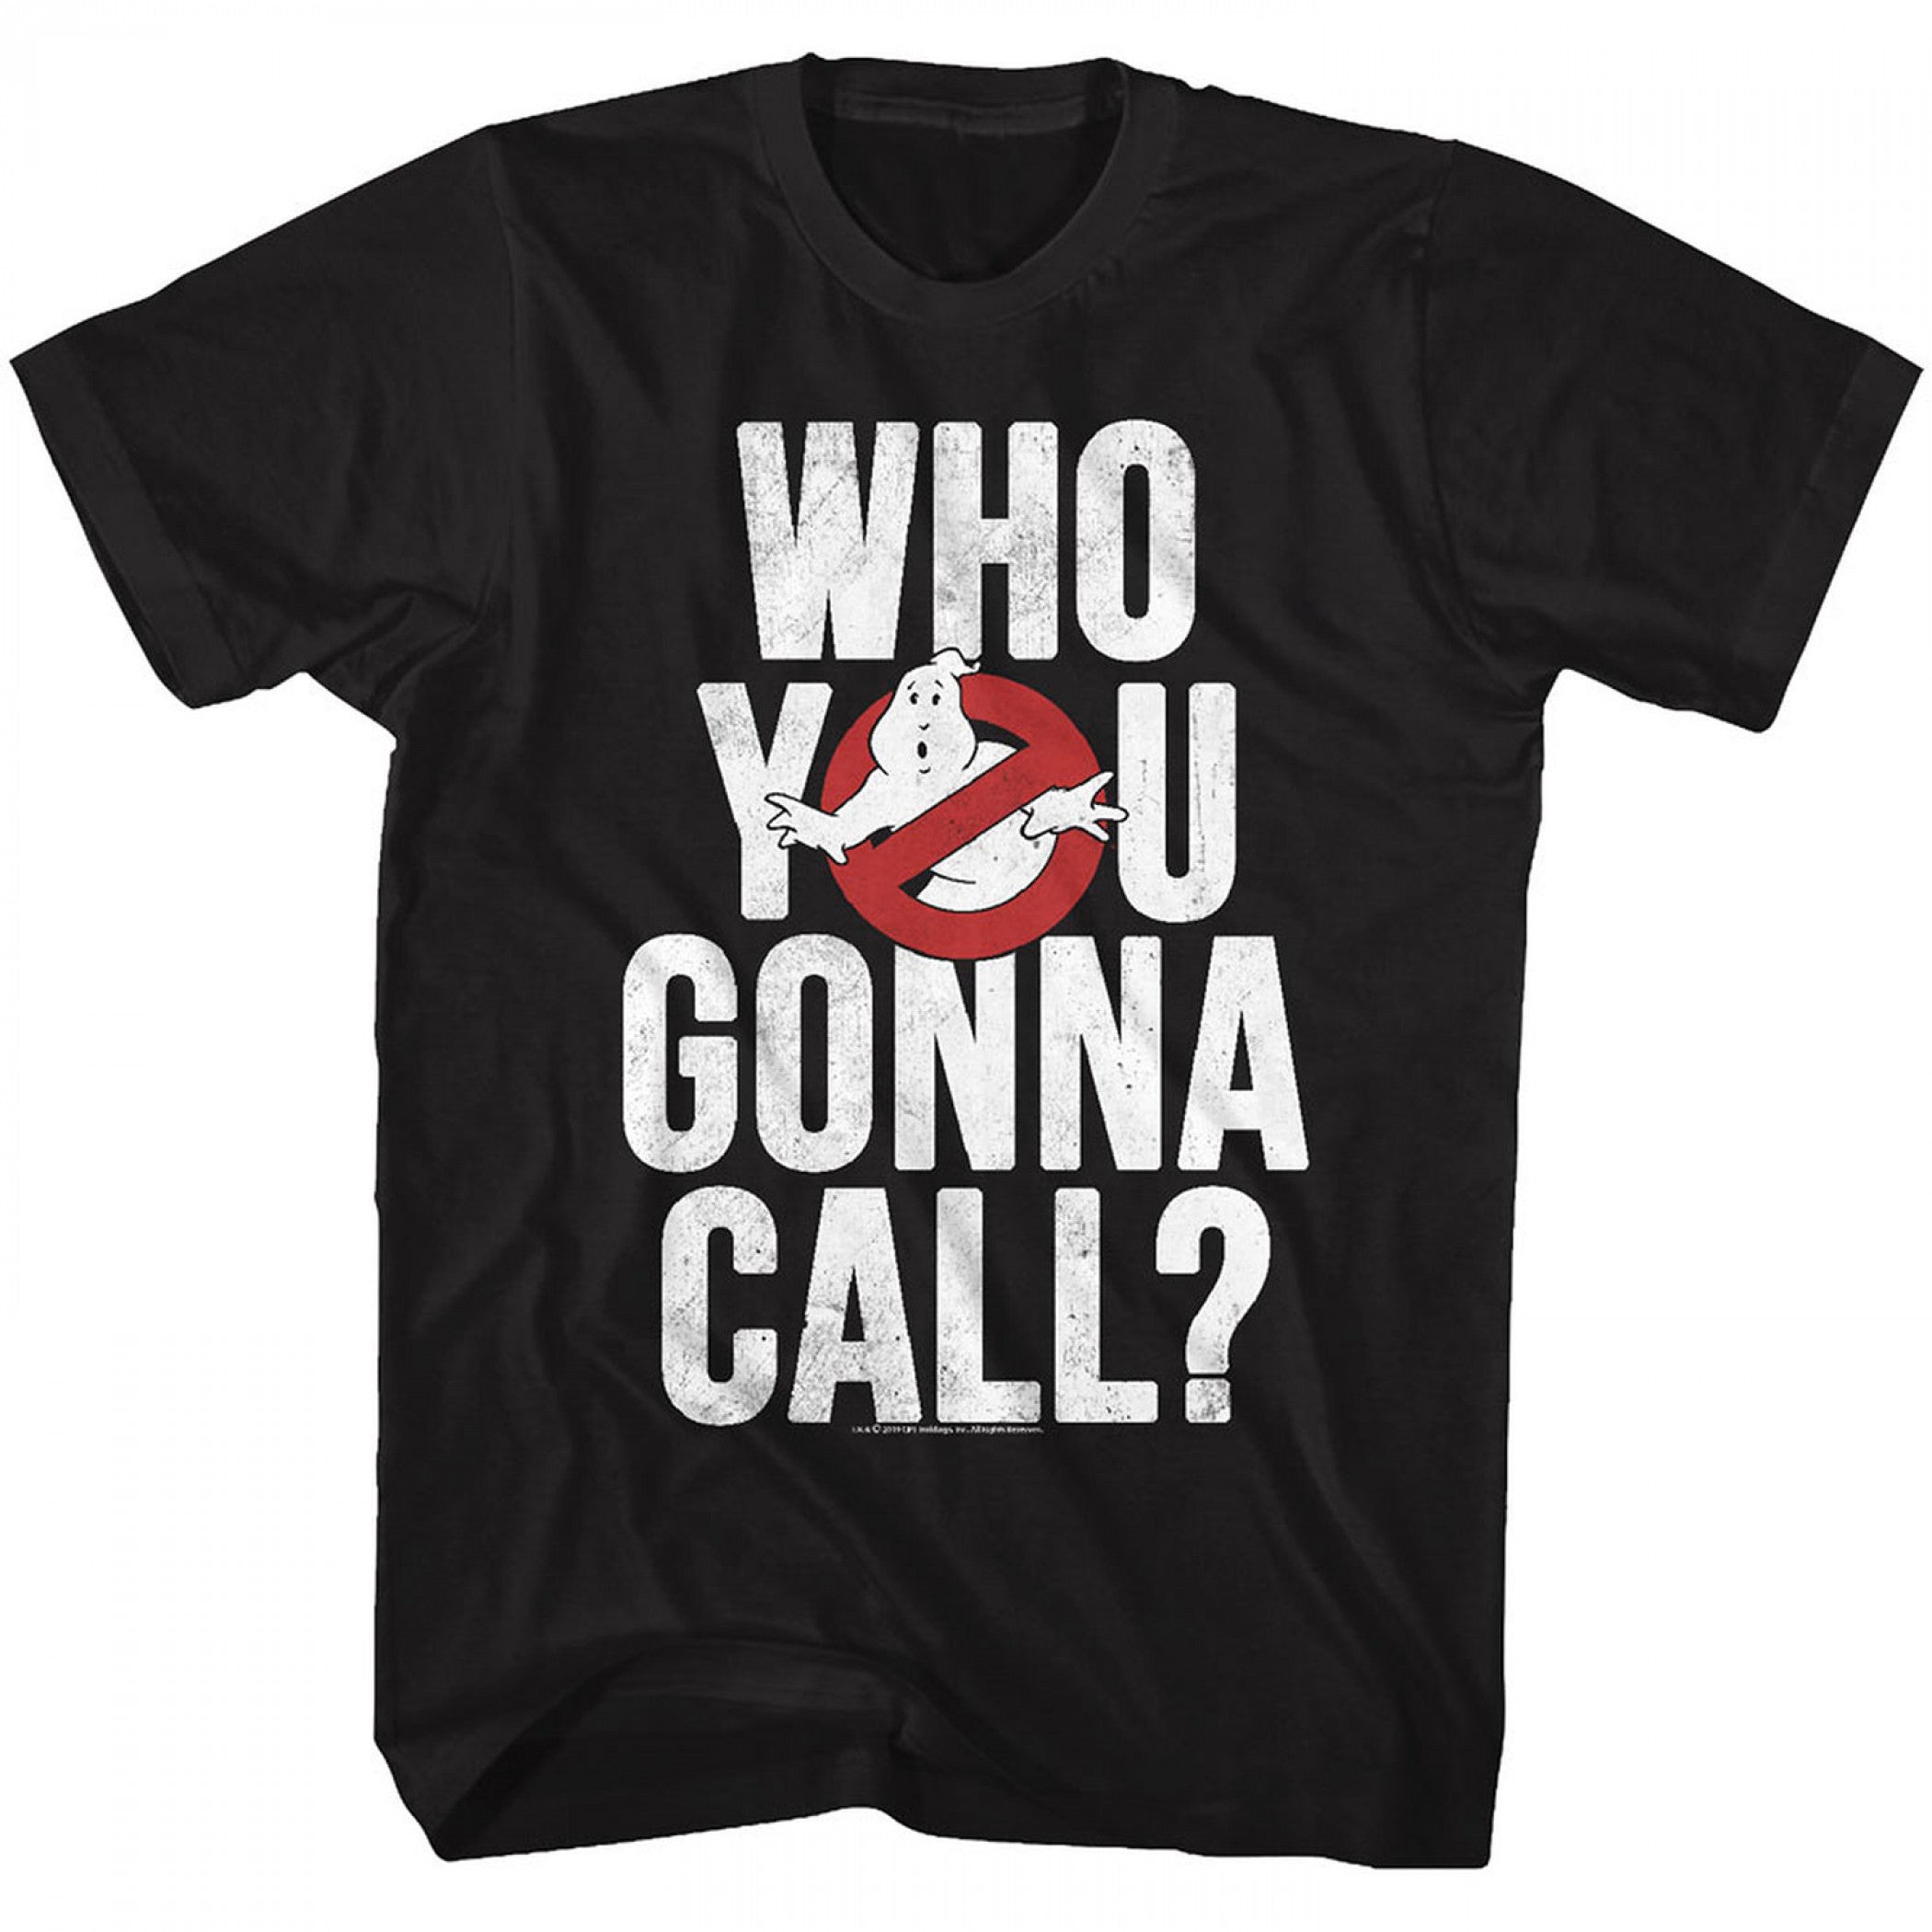 Ghostbusters Who Ya Gonna Call? T-Shirt